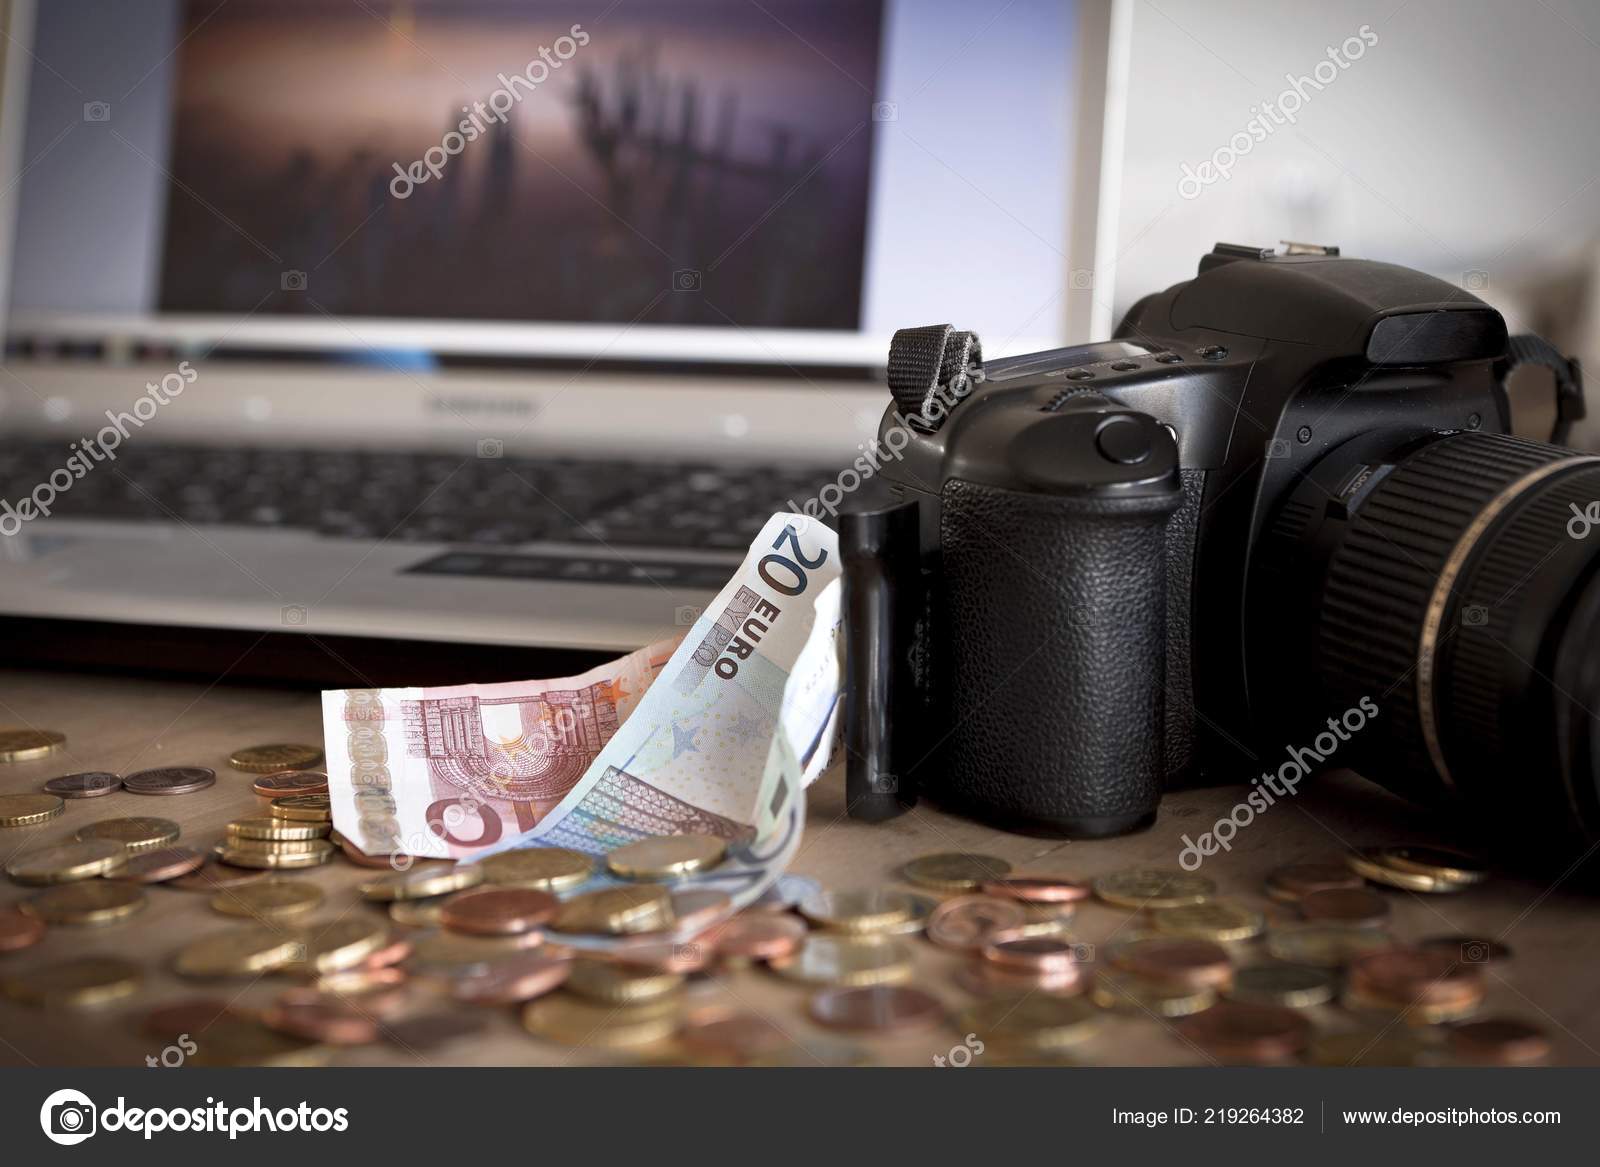 holte gat Schrijf een brief Money Camera Computer Earning Money Selling Photos Stock Photo by  ©imagebrokermicrostock 219264382